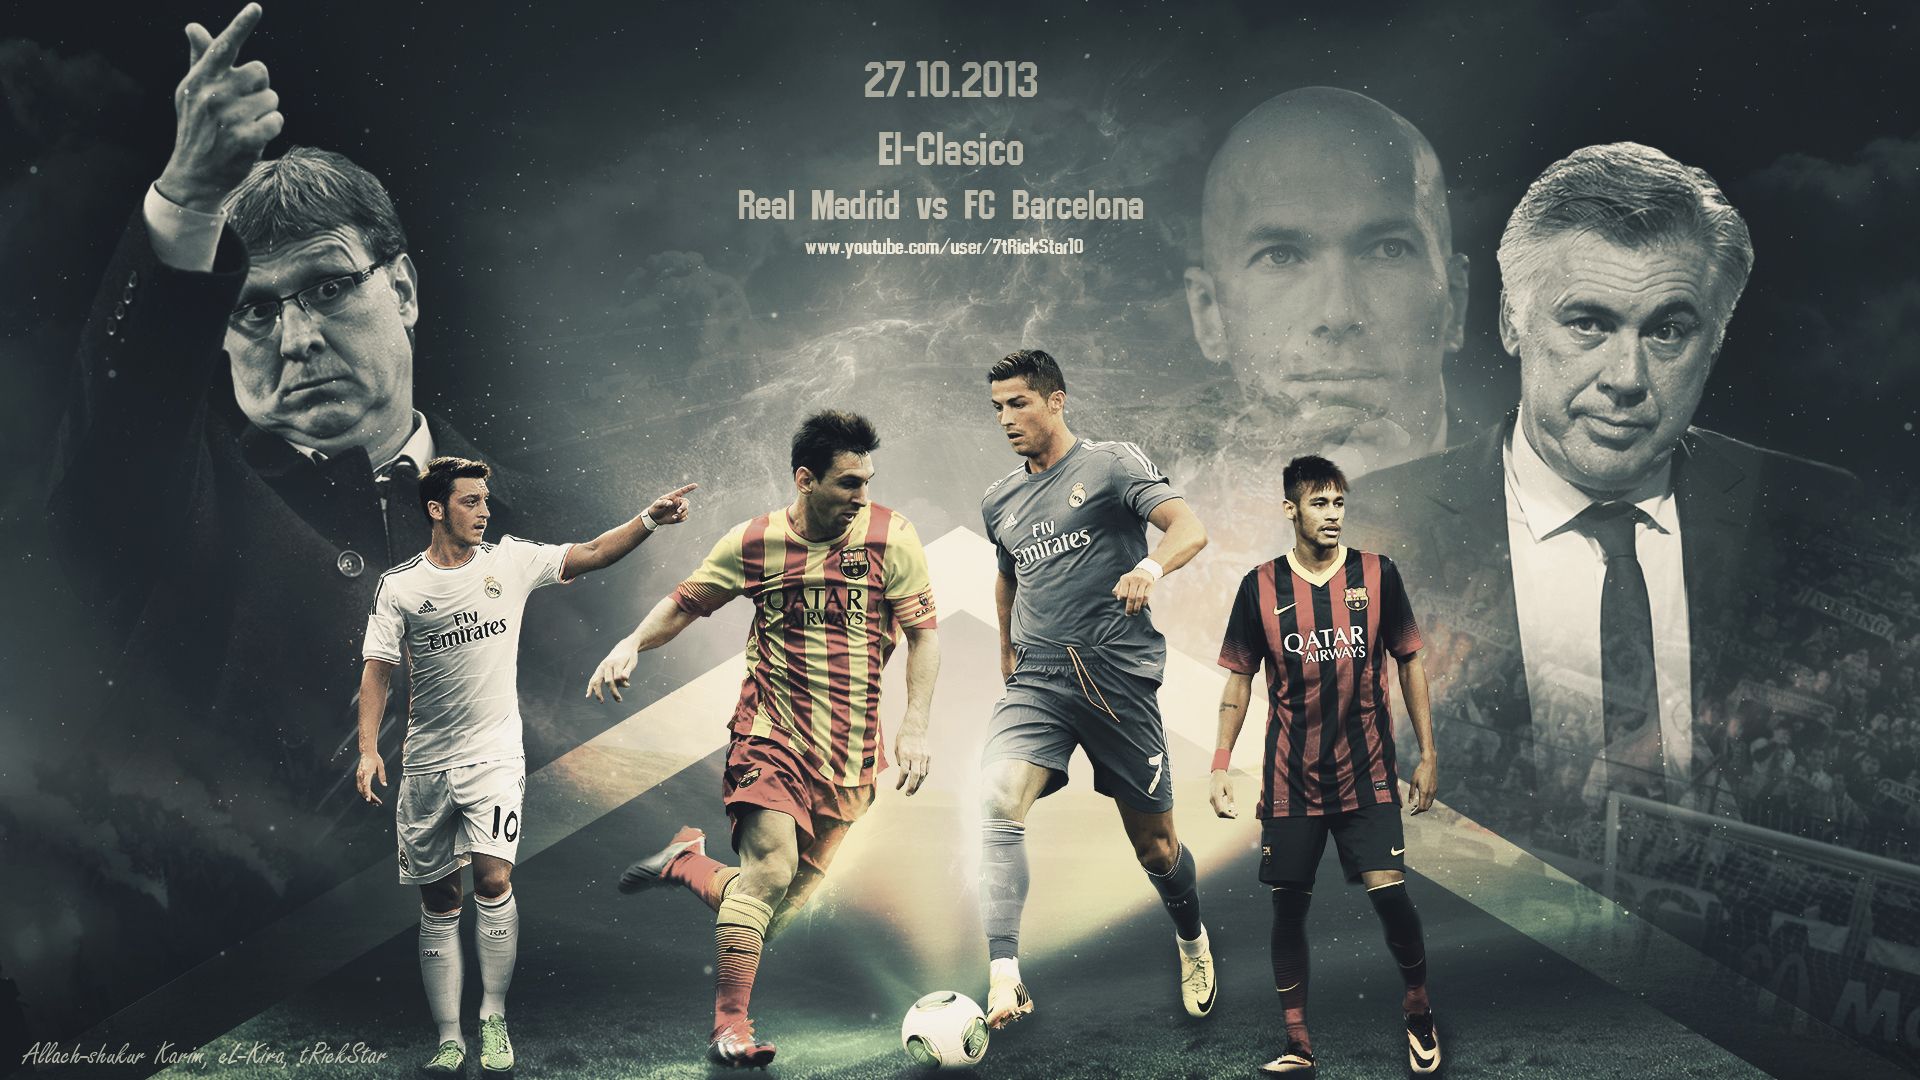 Real Madrid vs FC Barcelona El Clasico Wallpaper by eL Kira